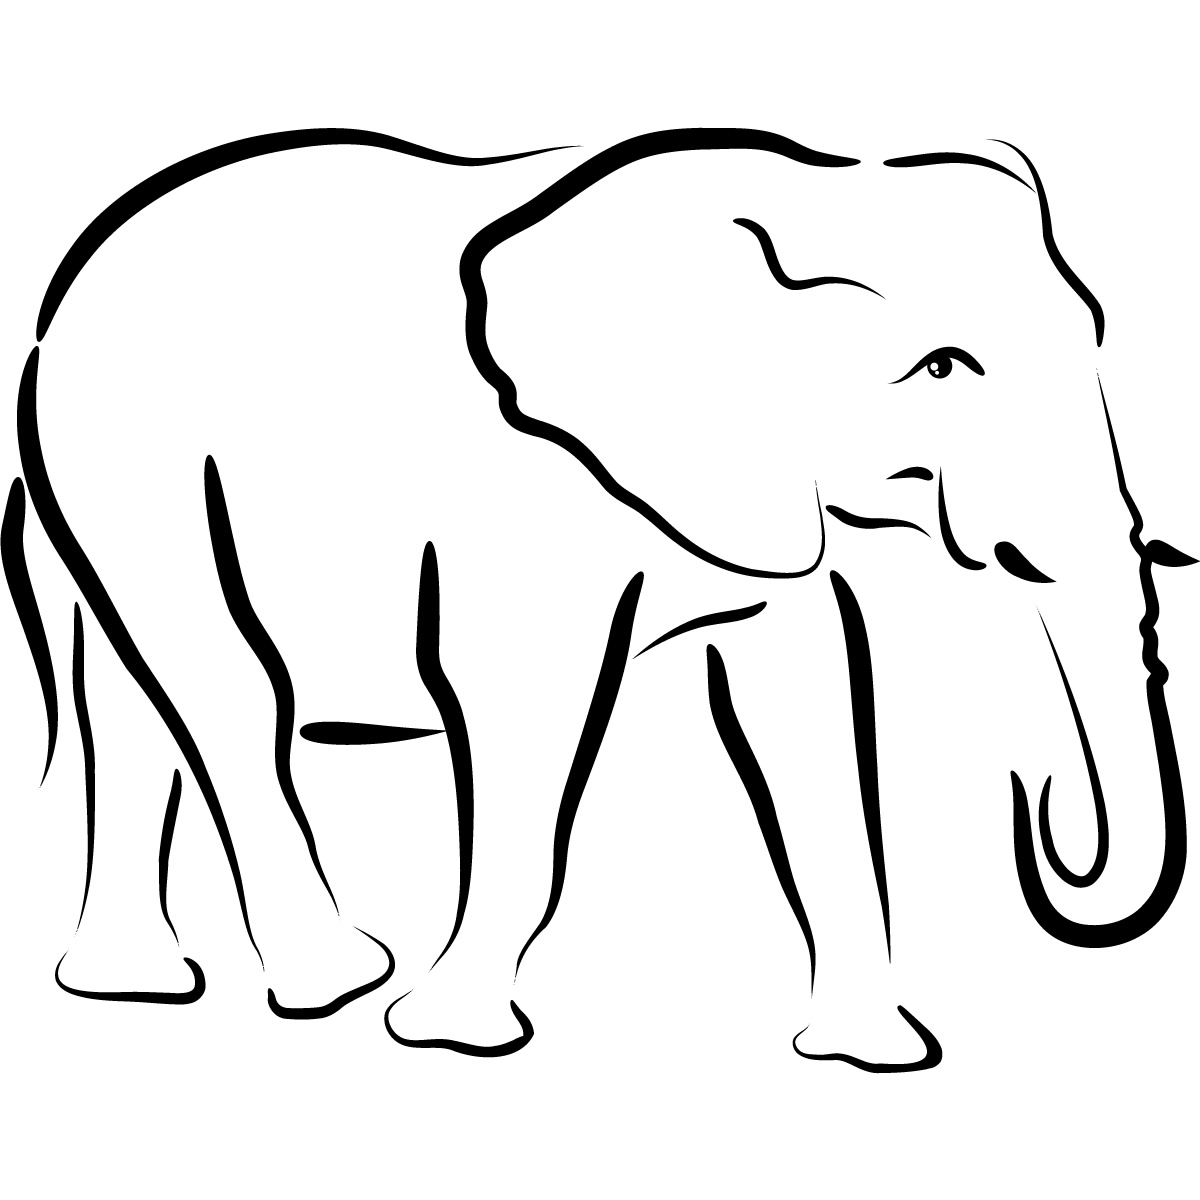 Elephant Outline Animals Wall Art Stickers Transfers | eBay